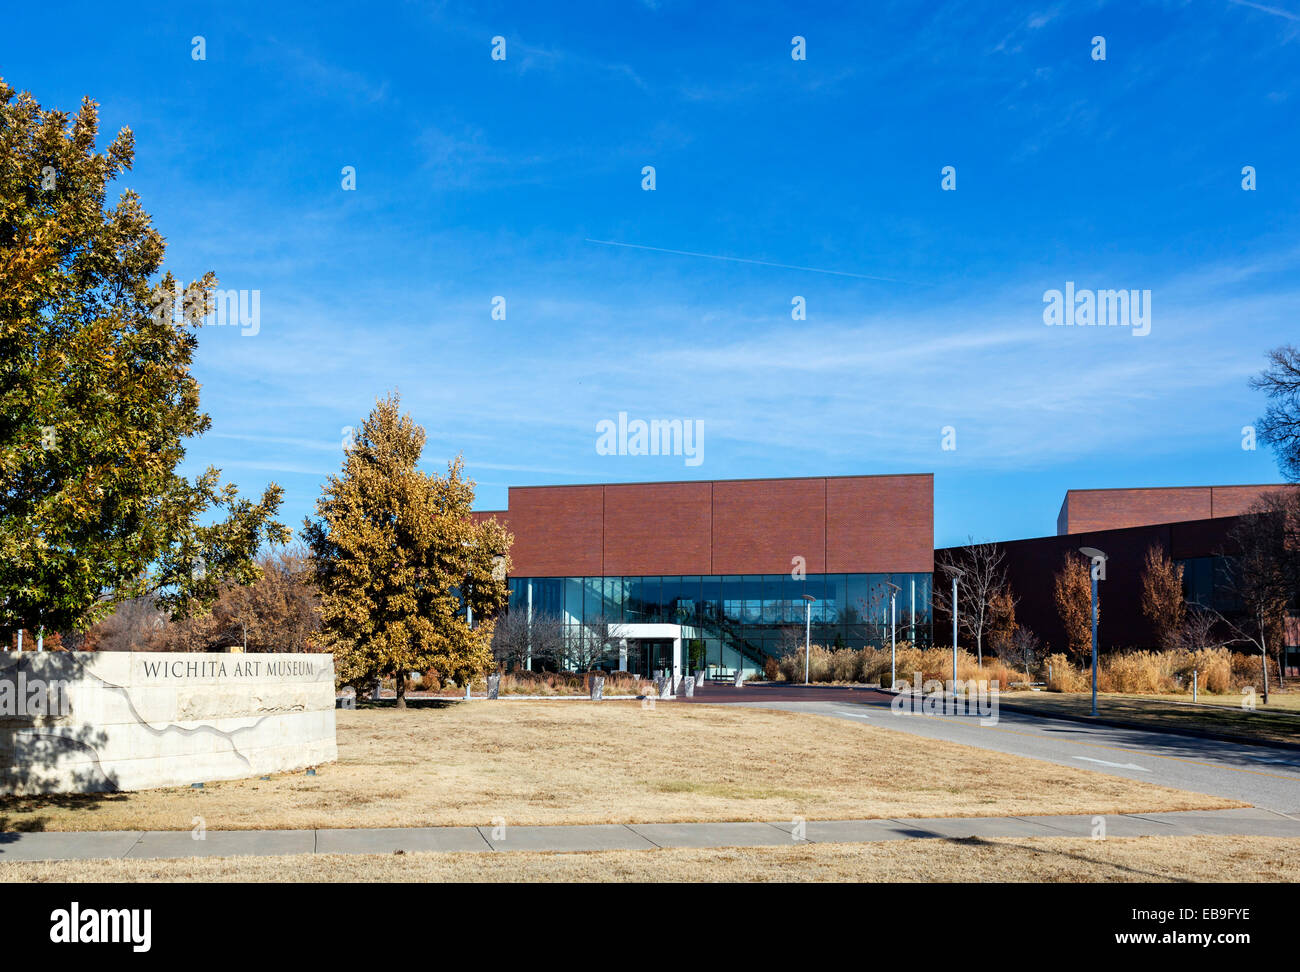 Wichita Art Museum, Wichita, Kansas, États-Unis Banque D'Images